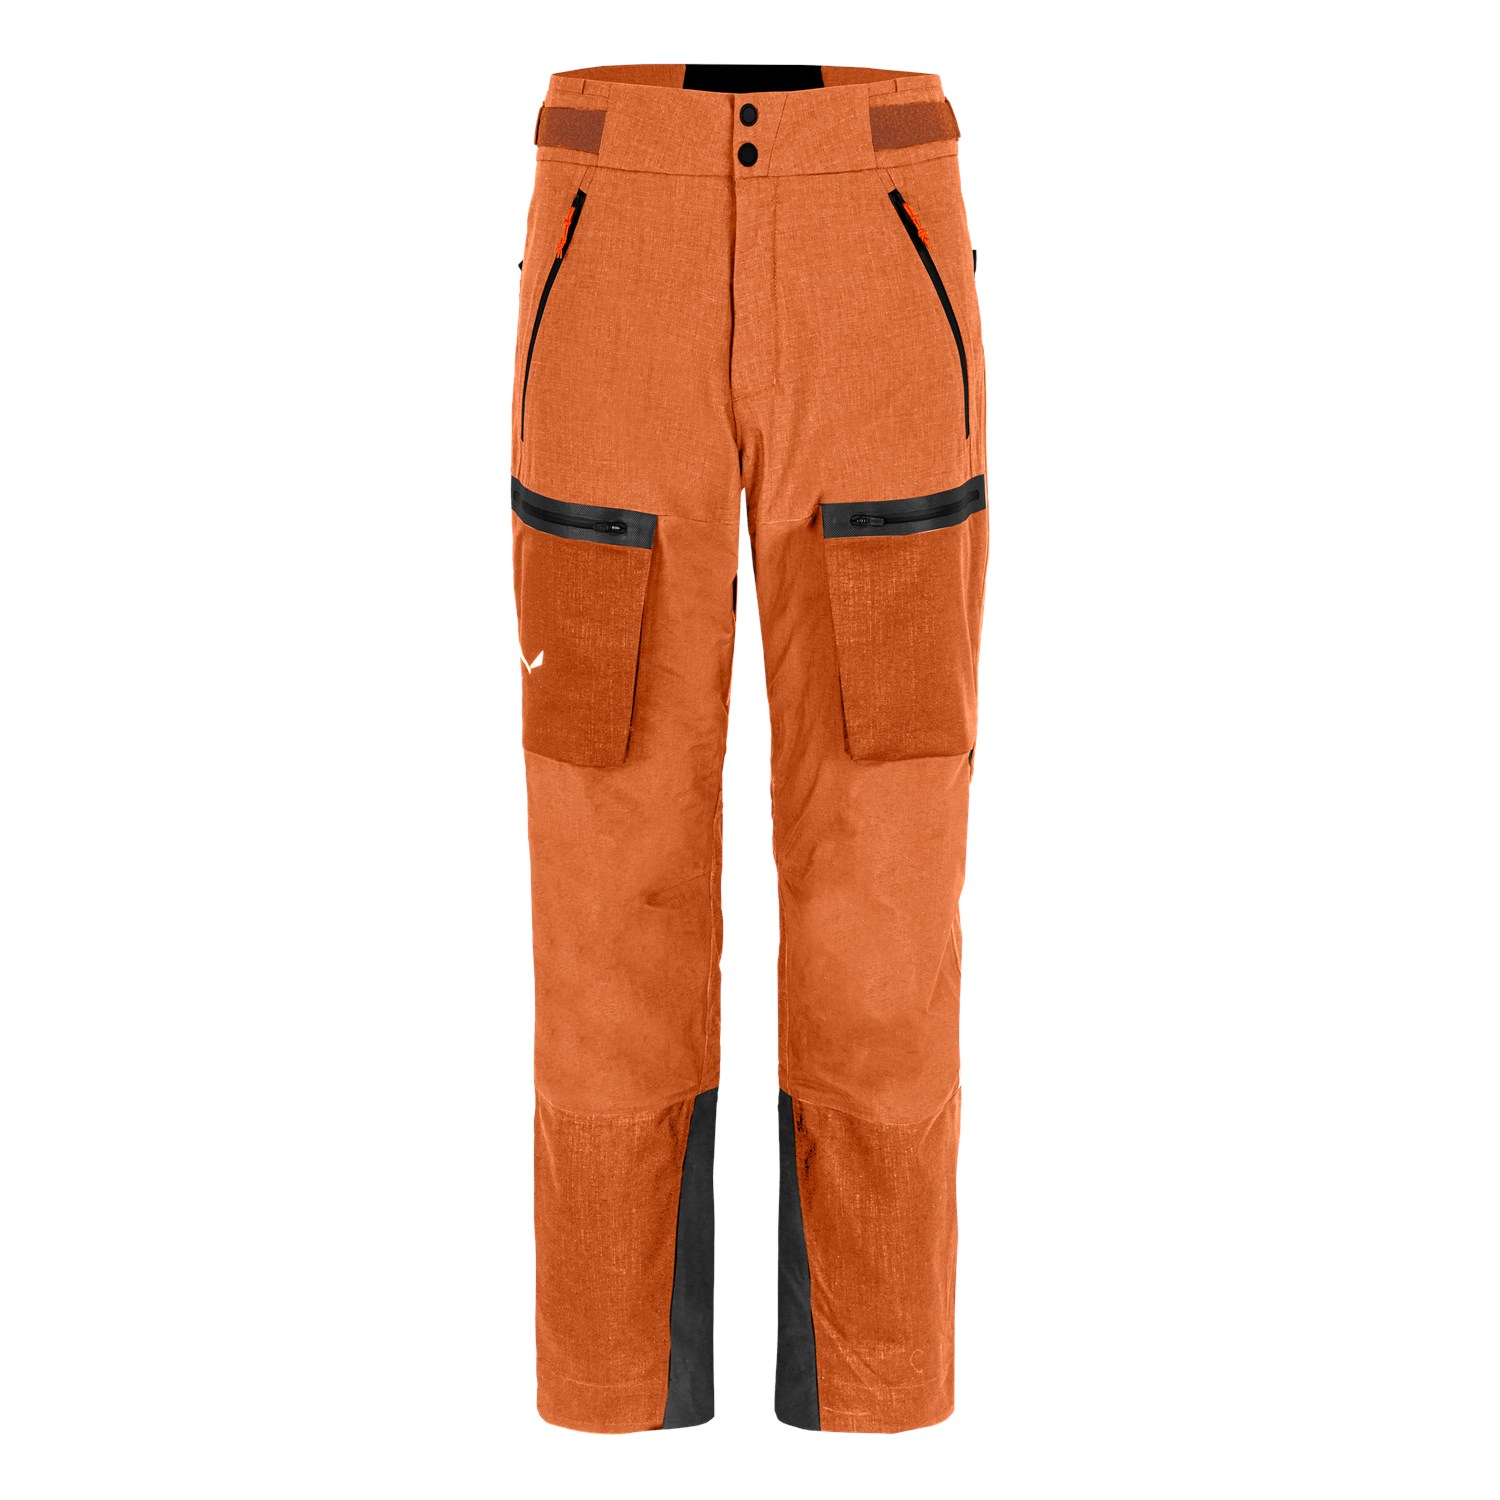 Buy Men's Orange Relaxed Fit Cargo Trousers Online at Bewakoof